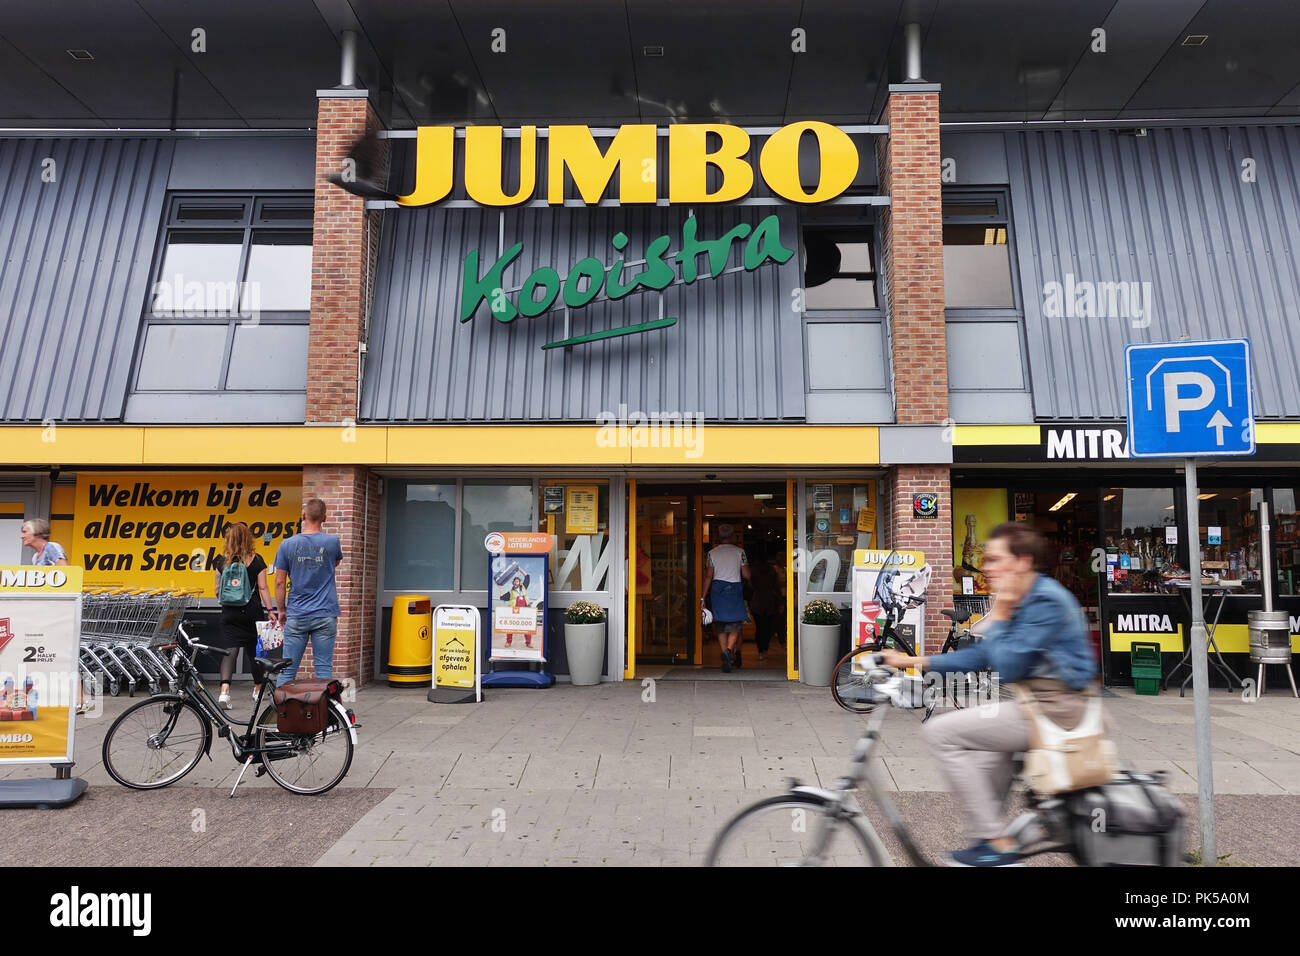 JUMBO SUPERMARKET IN THE NETHERLANDS